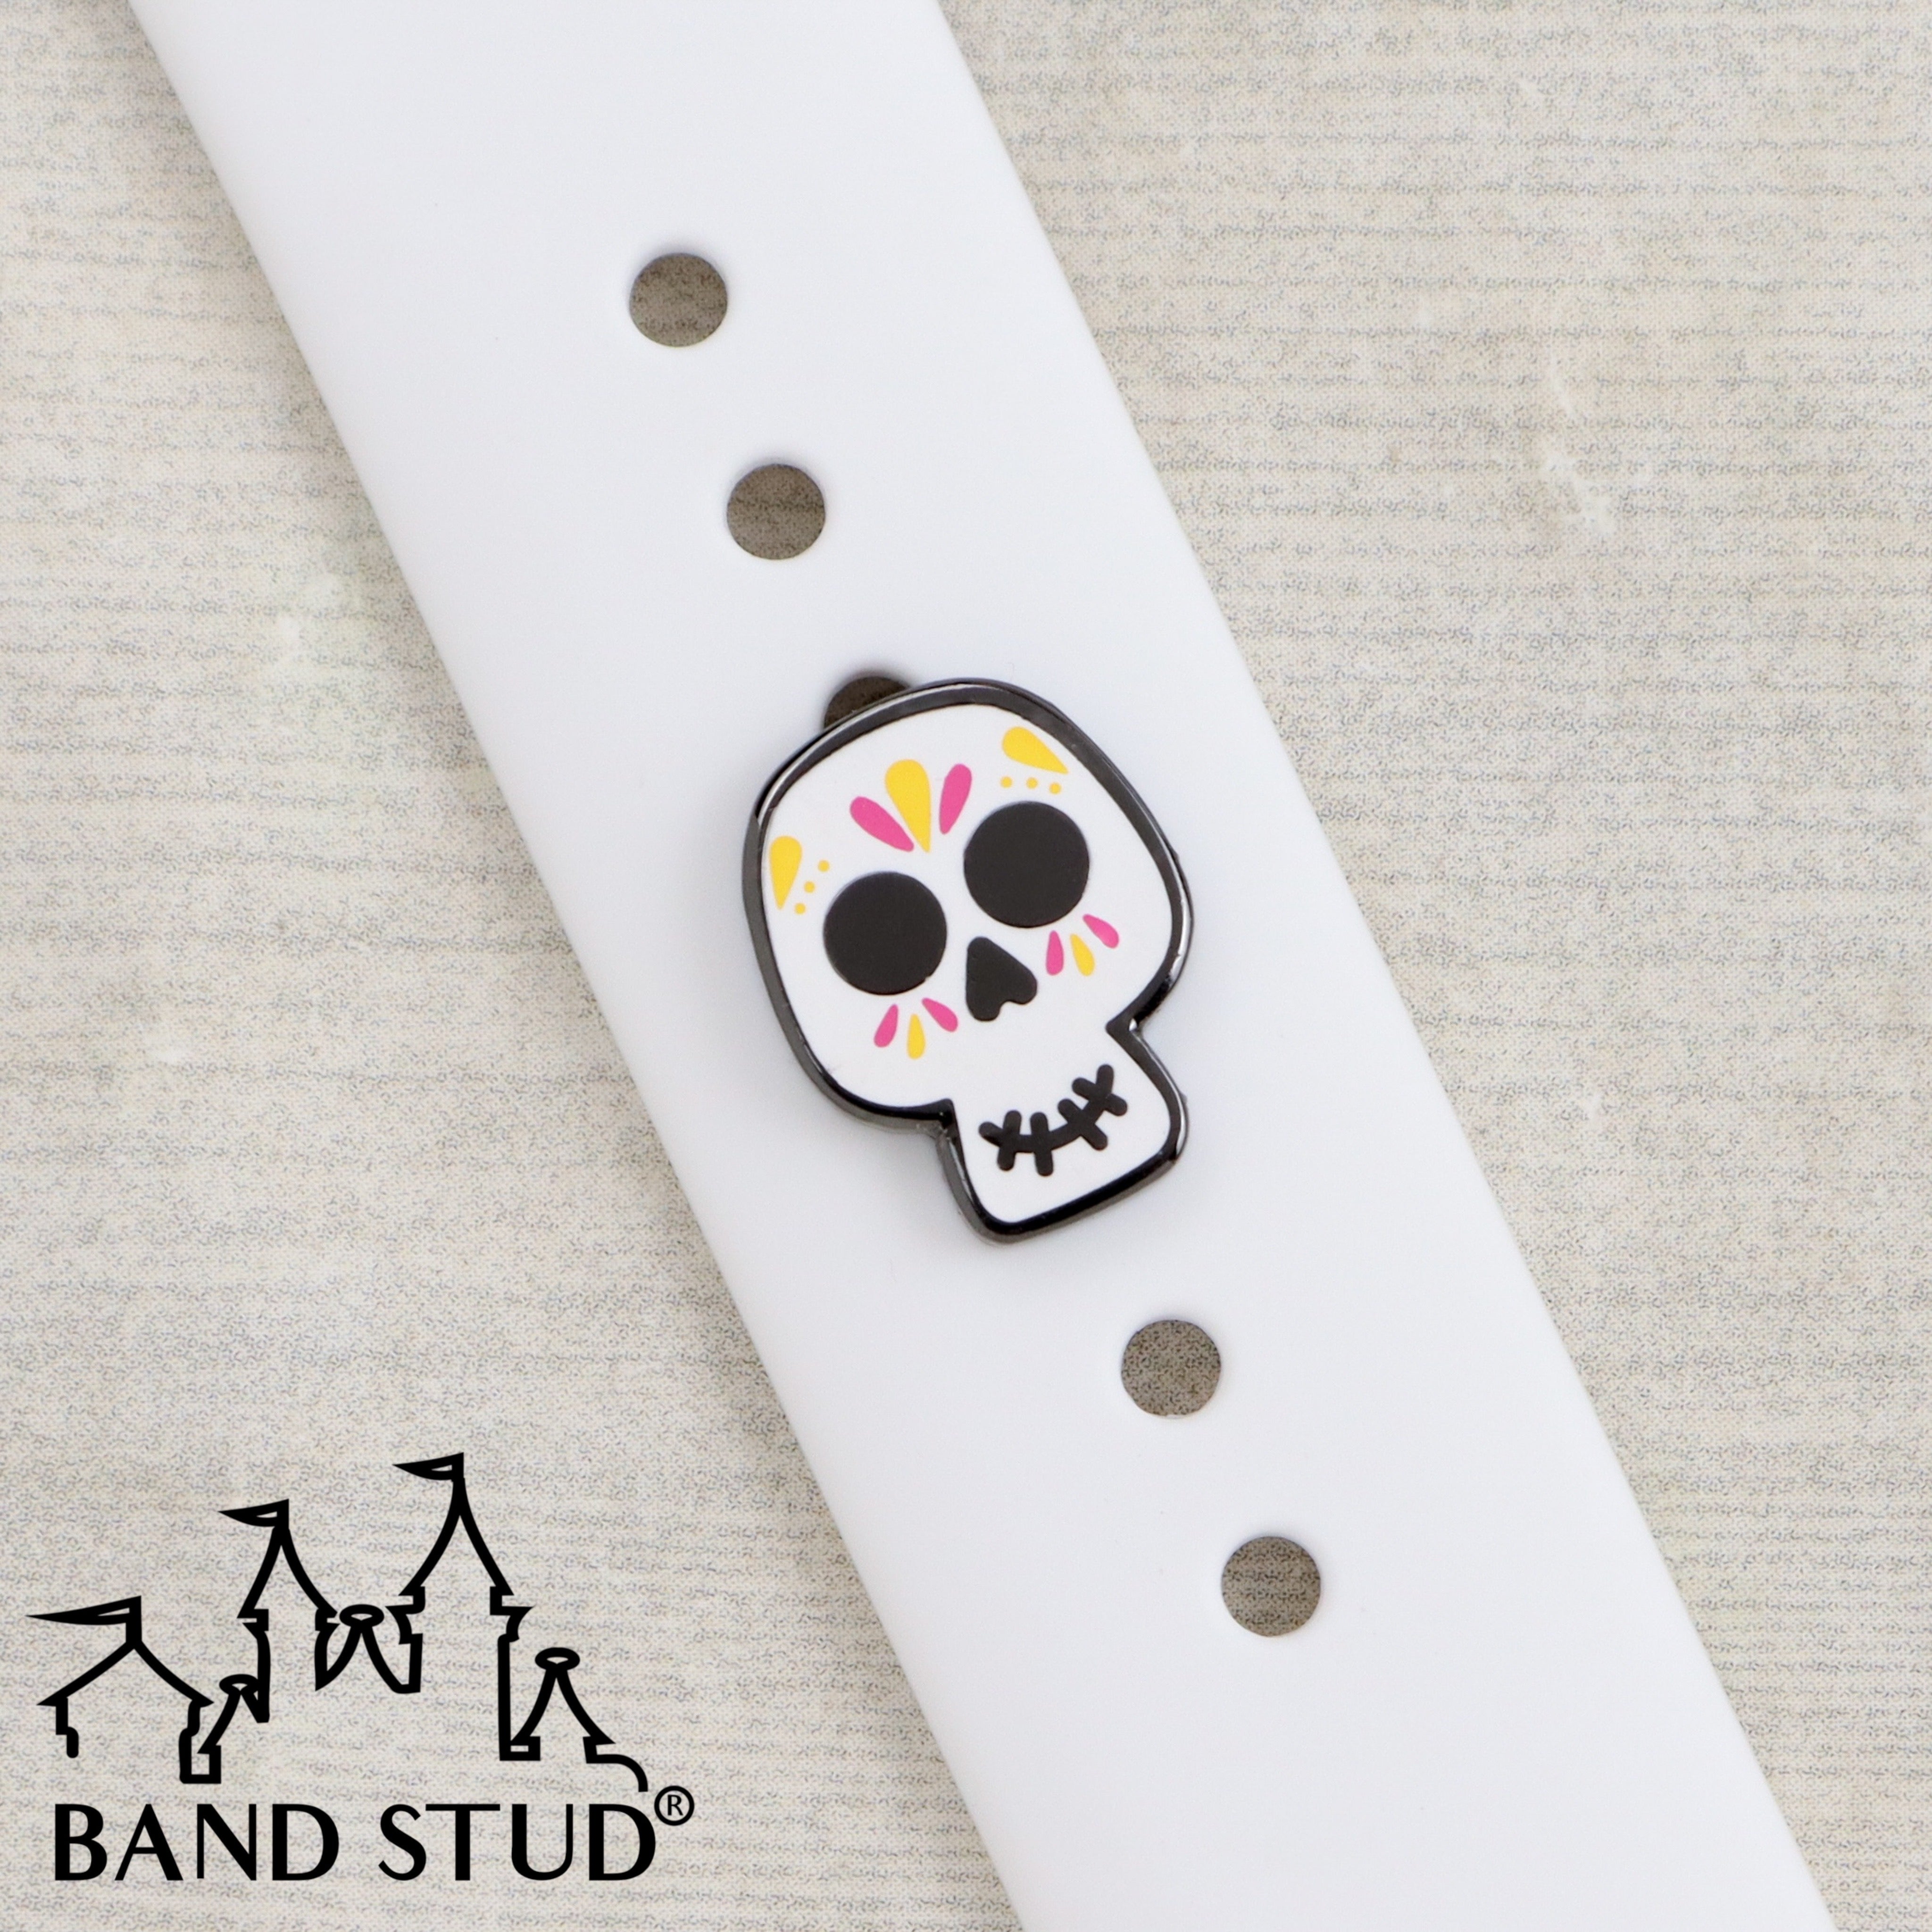 Band Stud® - Sugar Skull